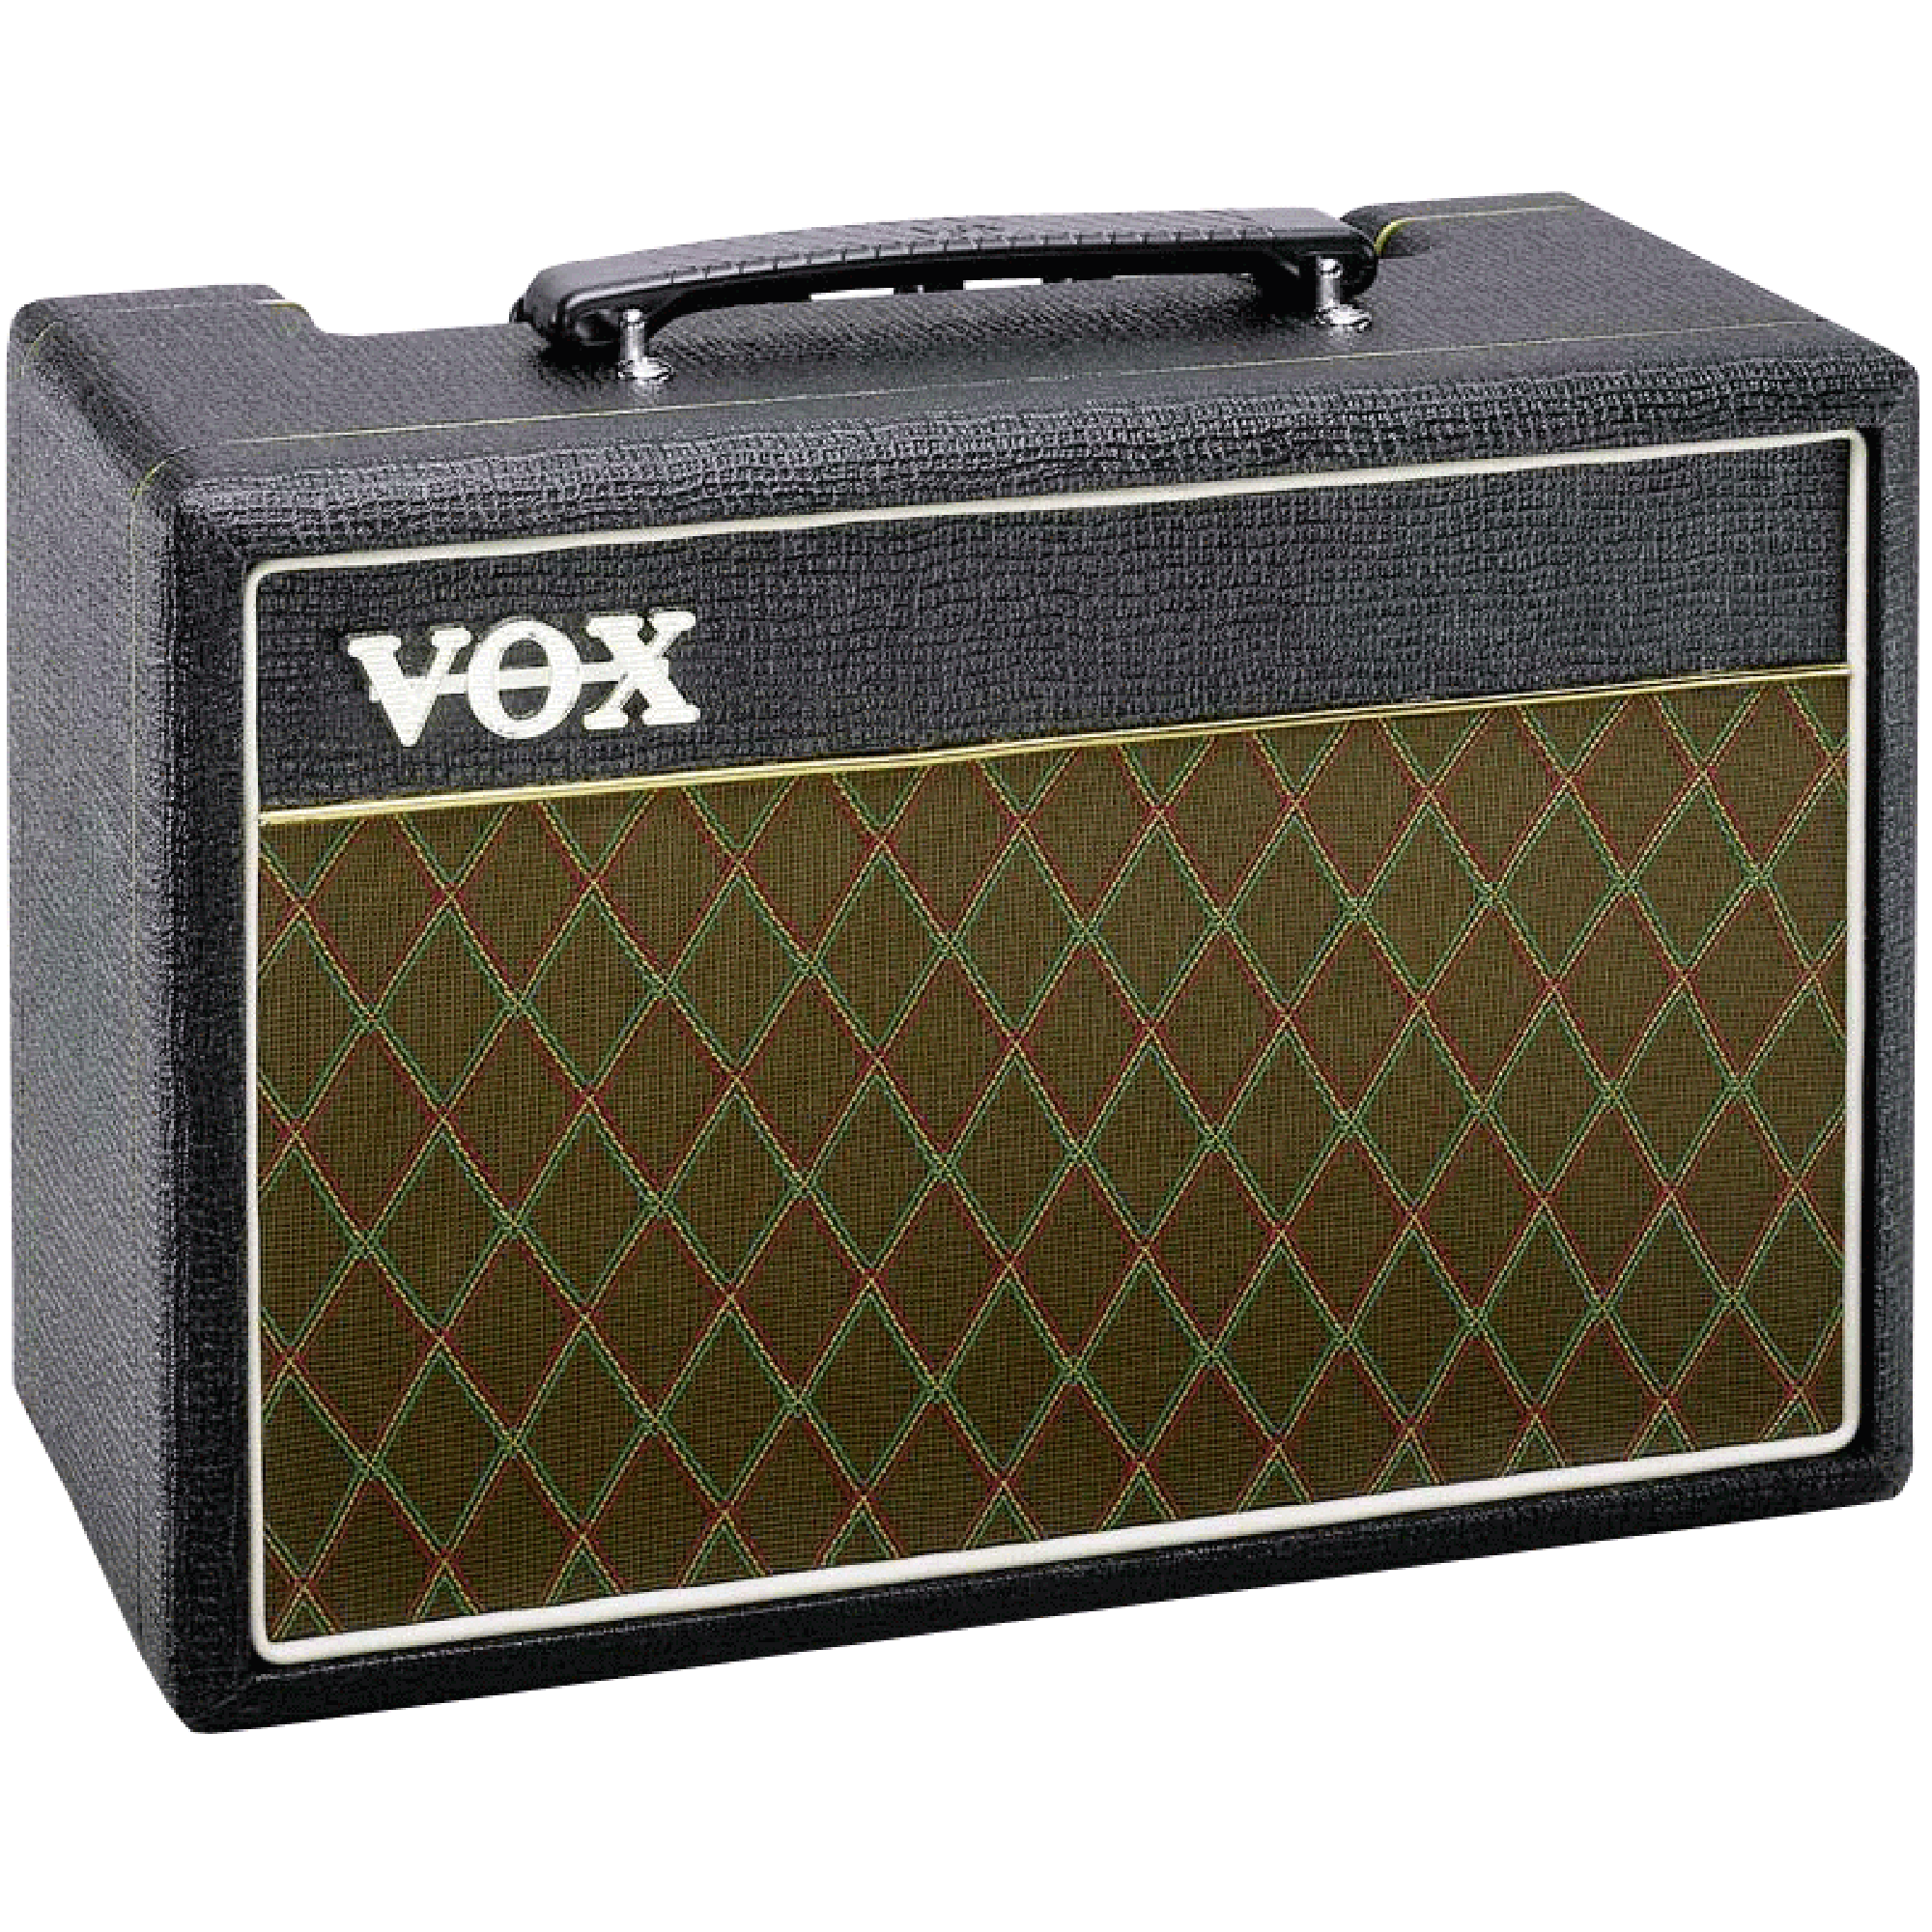 vox pathfinder 15r or valvetronix for pedals